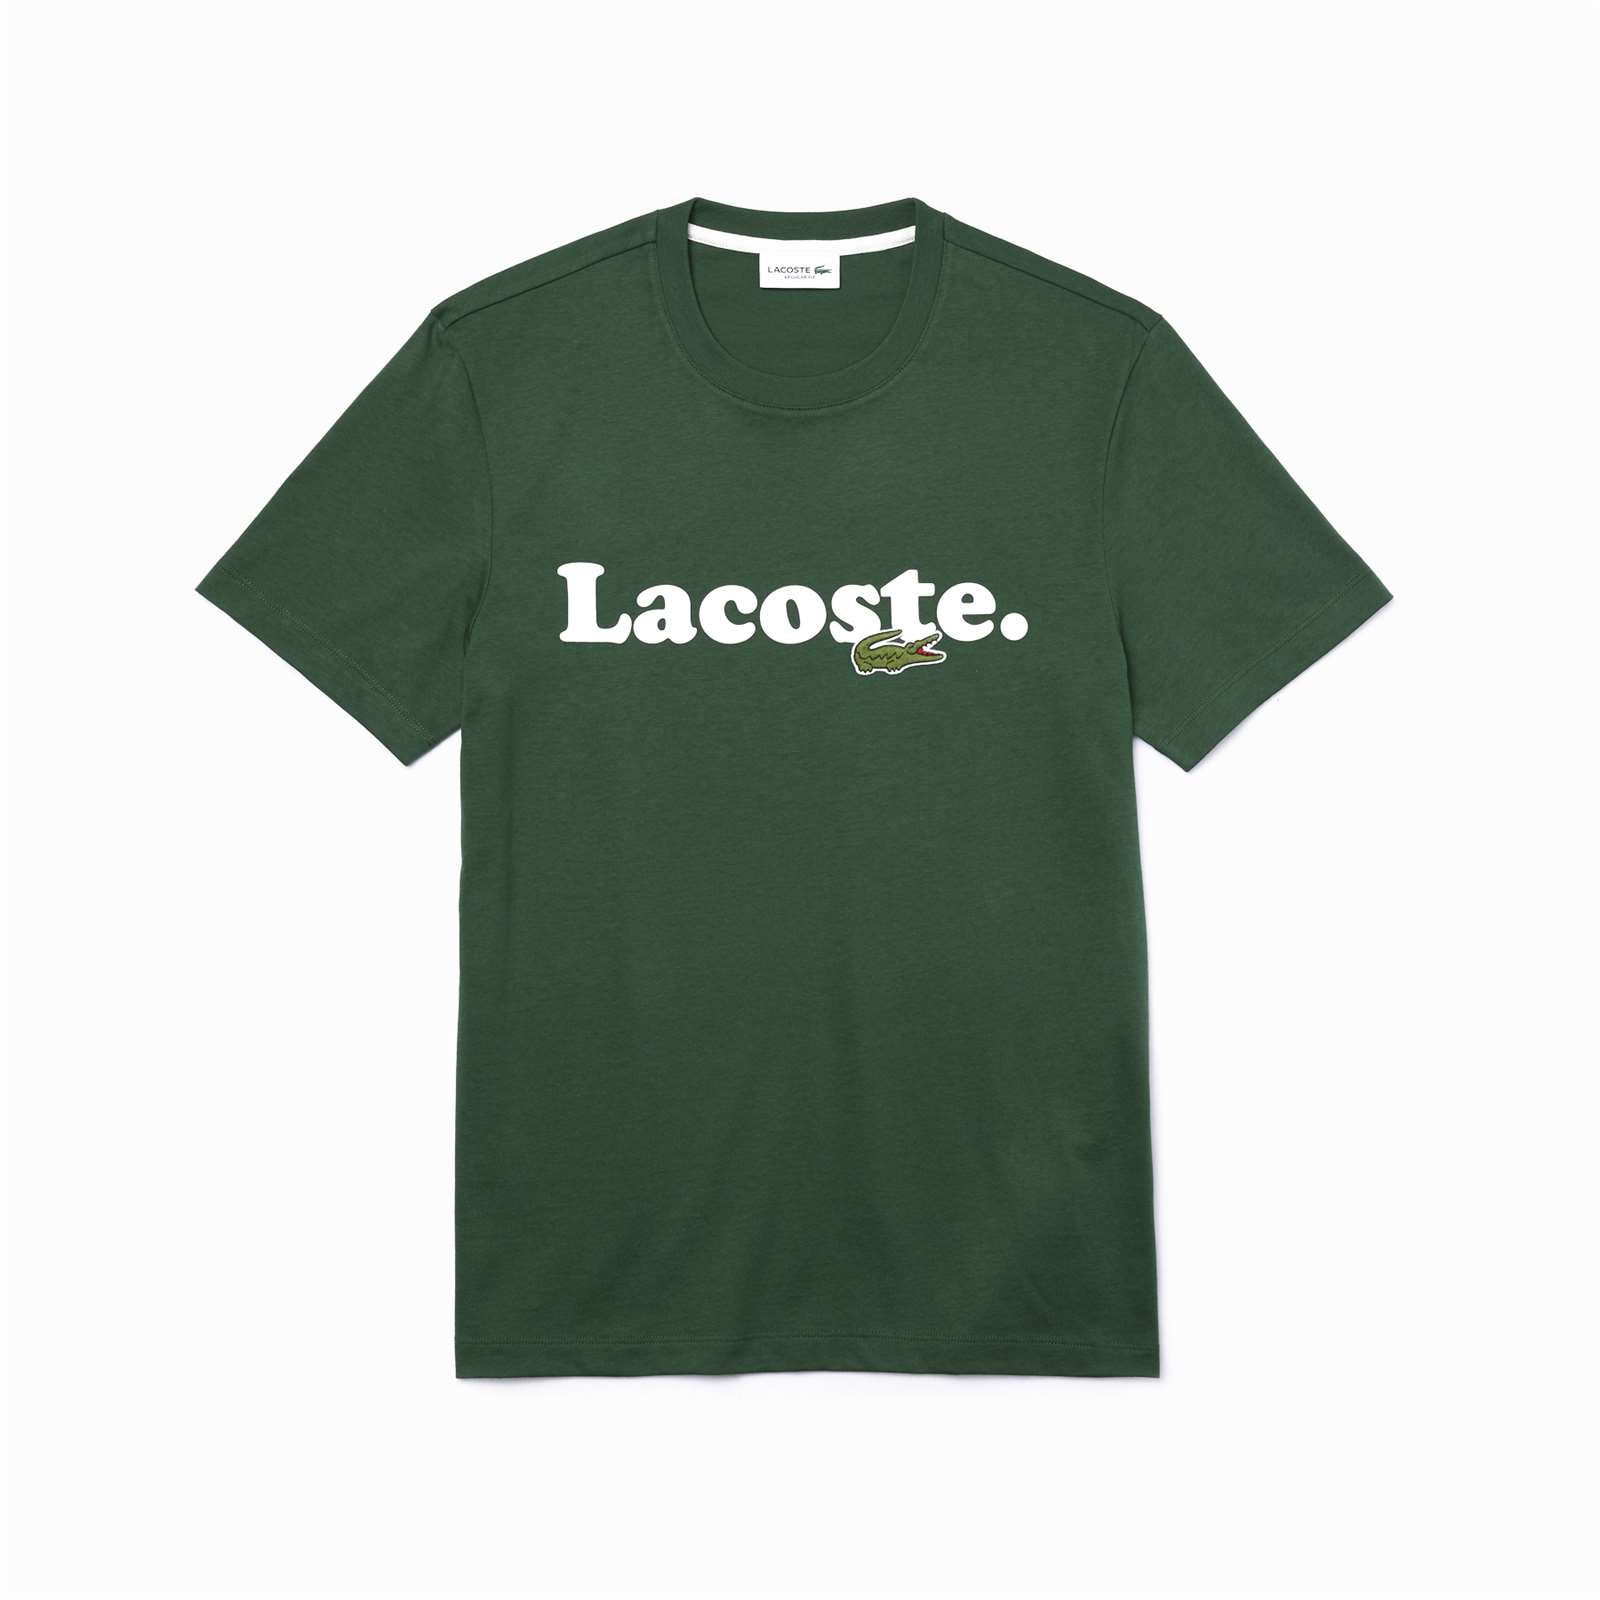 Lacoste Men Lacoste And Crocodile Branded Cotton T-Shirt